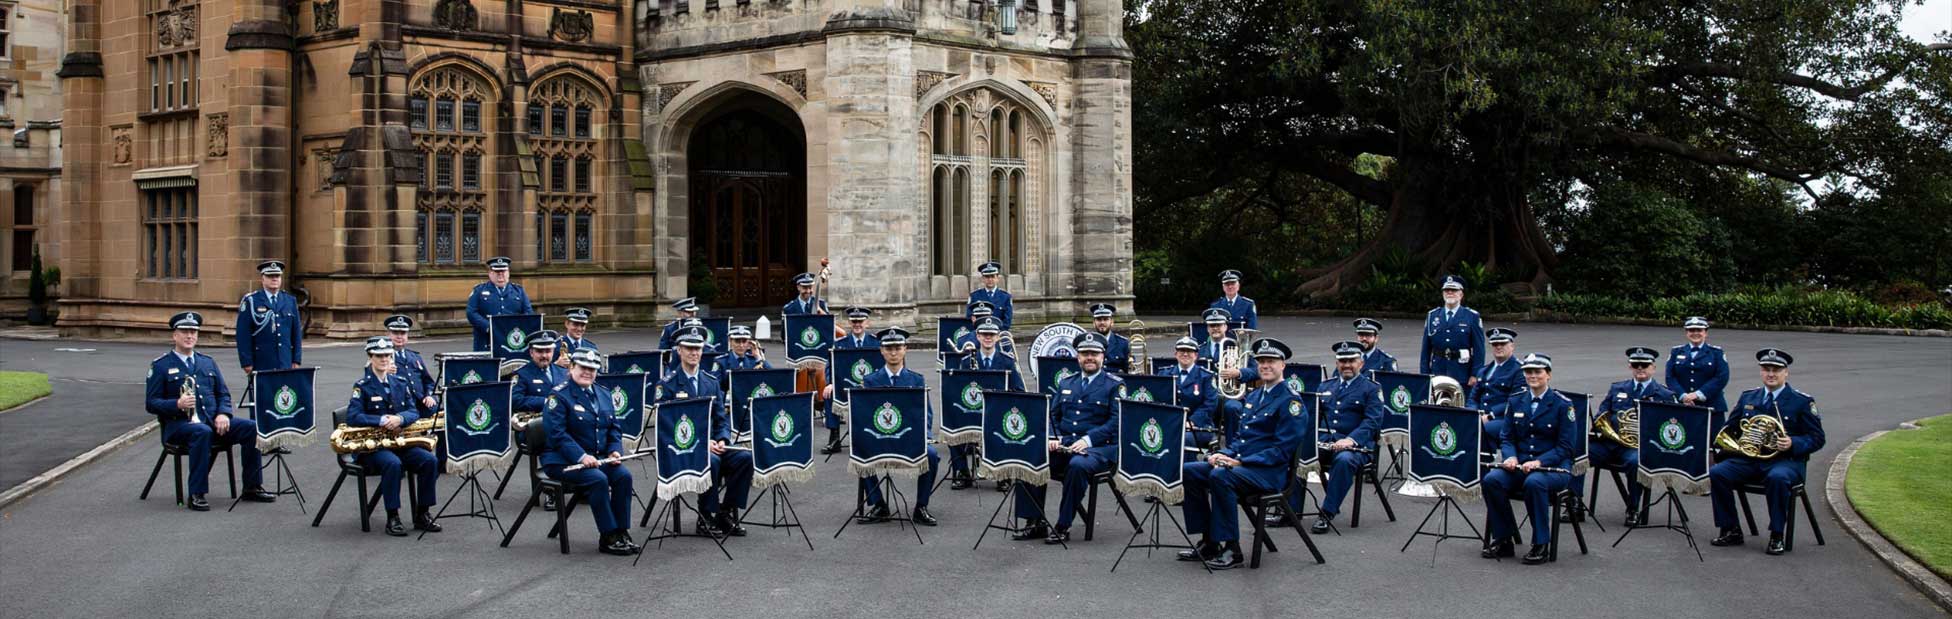 police band